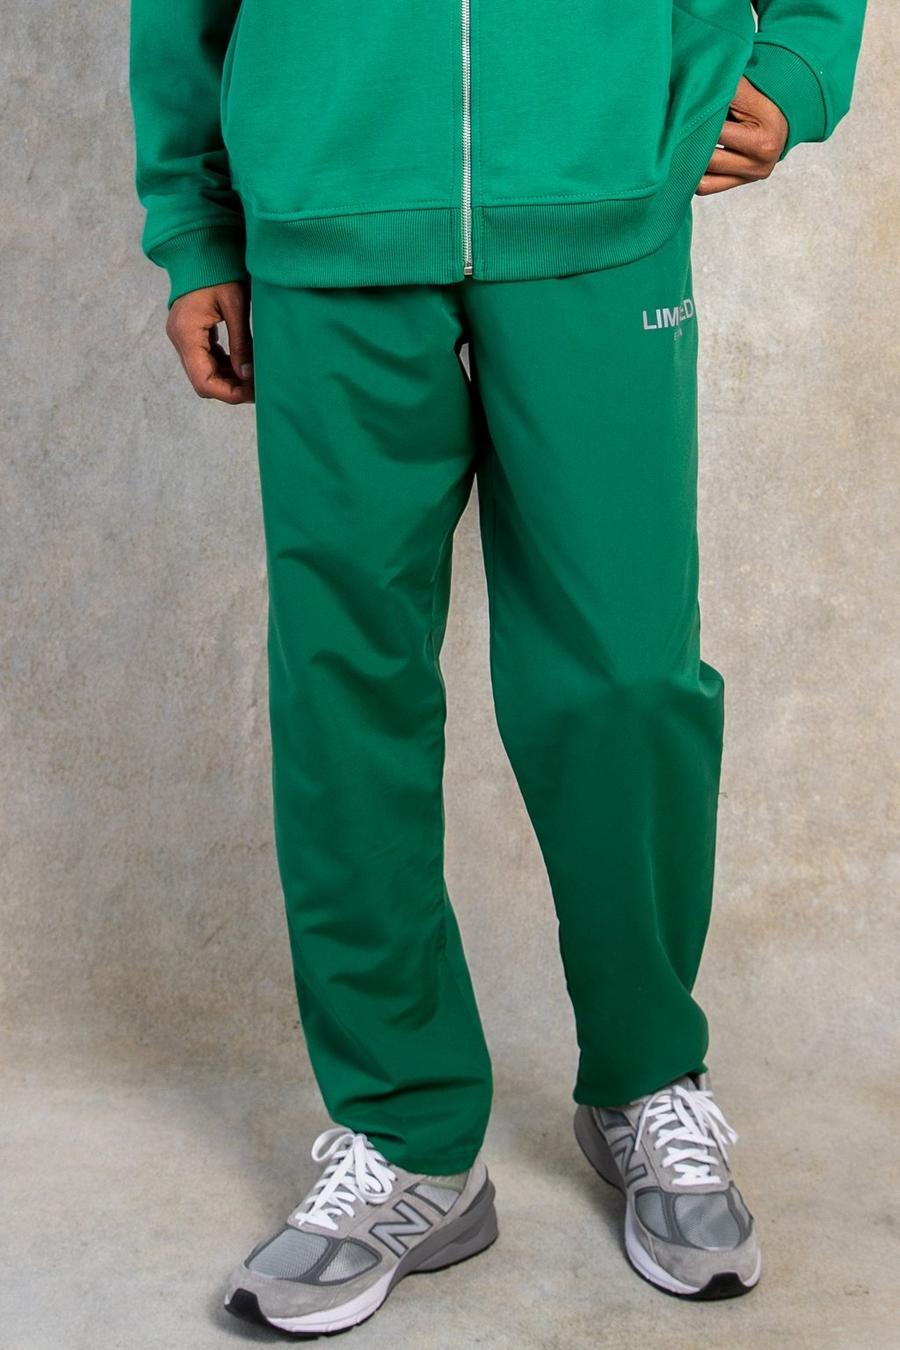 Green gerde מכנסיים בגזרה ישרה מבד עמיד בצבע אפרסק עם כיתוב Limited